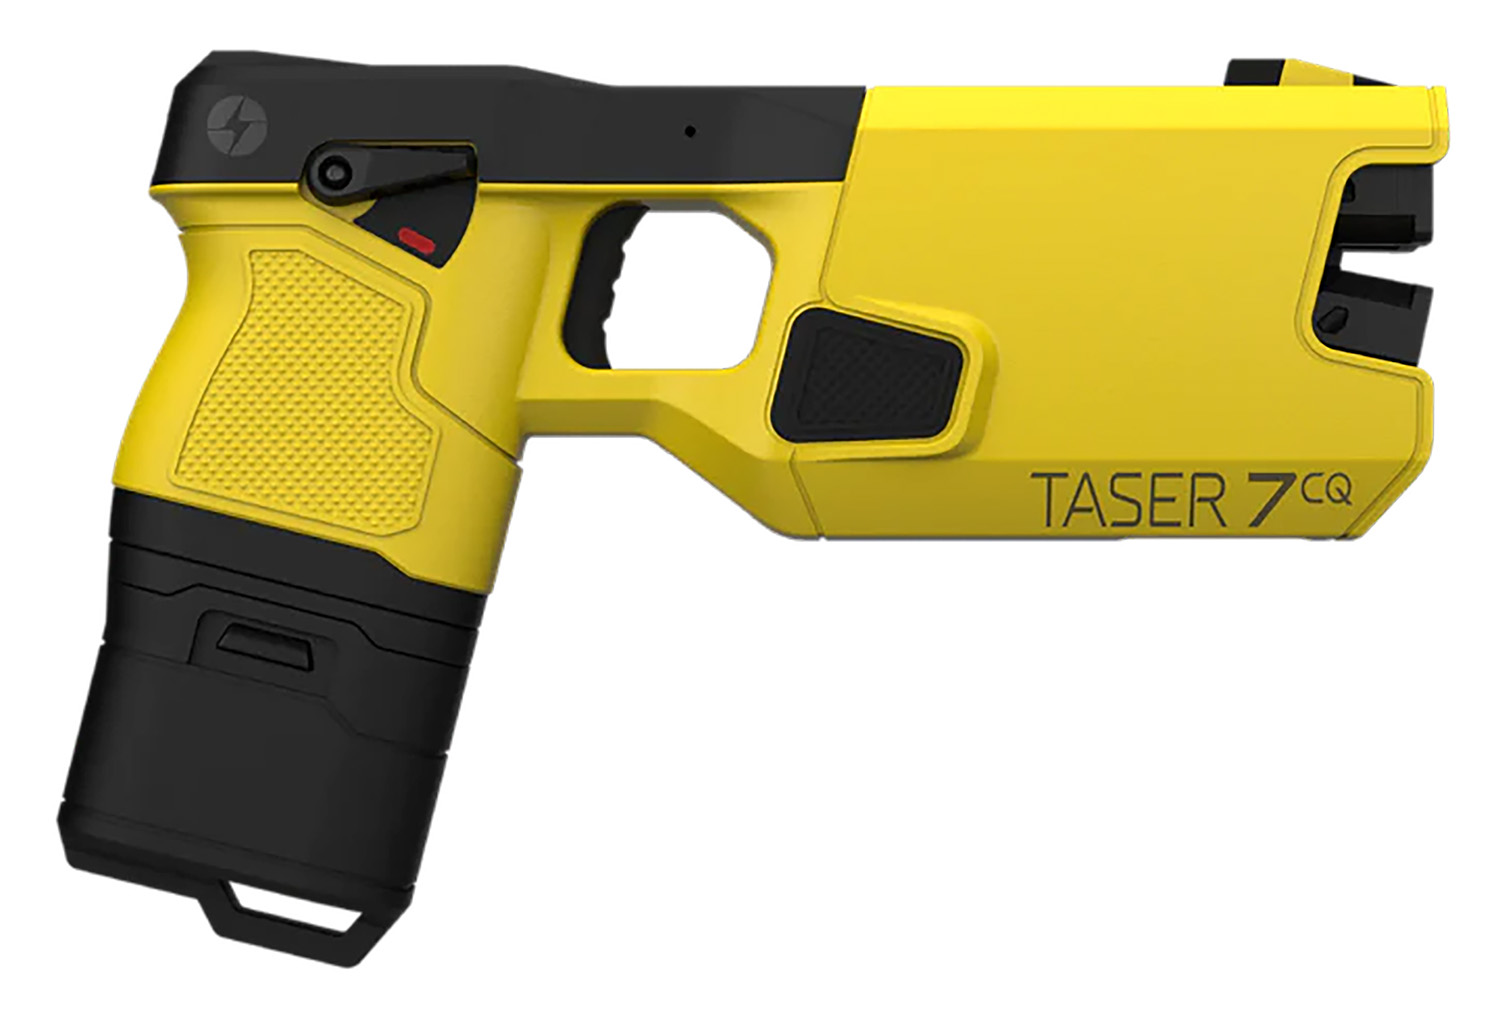 Axon/TASER (LC Products) 20285 Taser 7 CQ Home Defense Range Of 12 ft Black Yellow